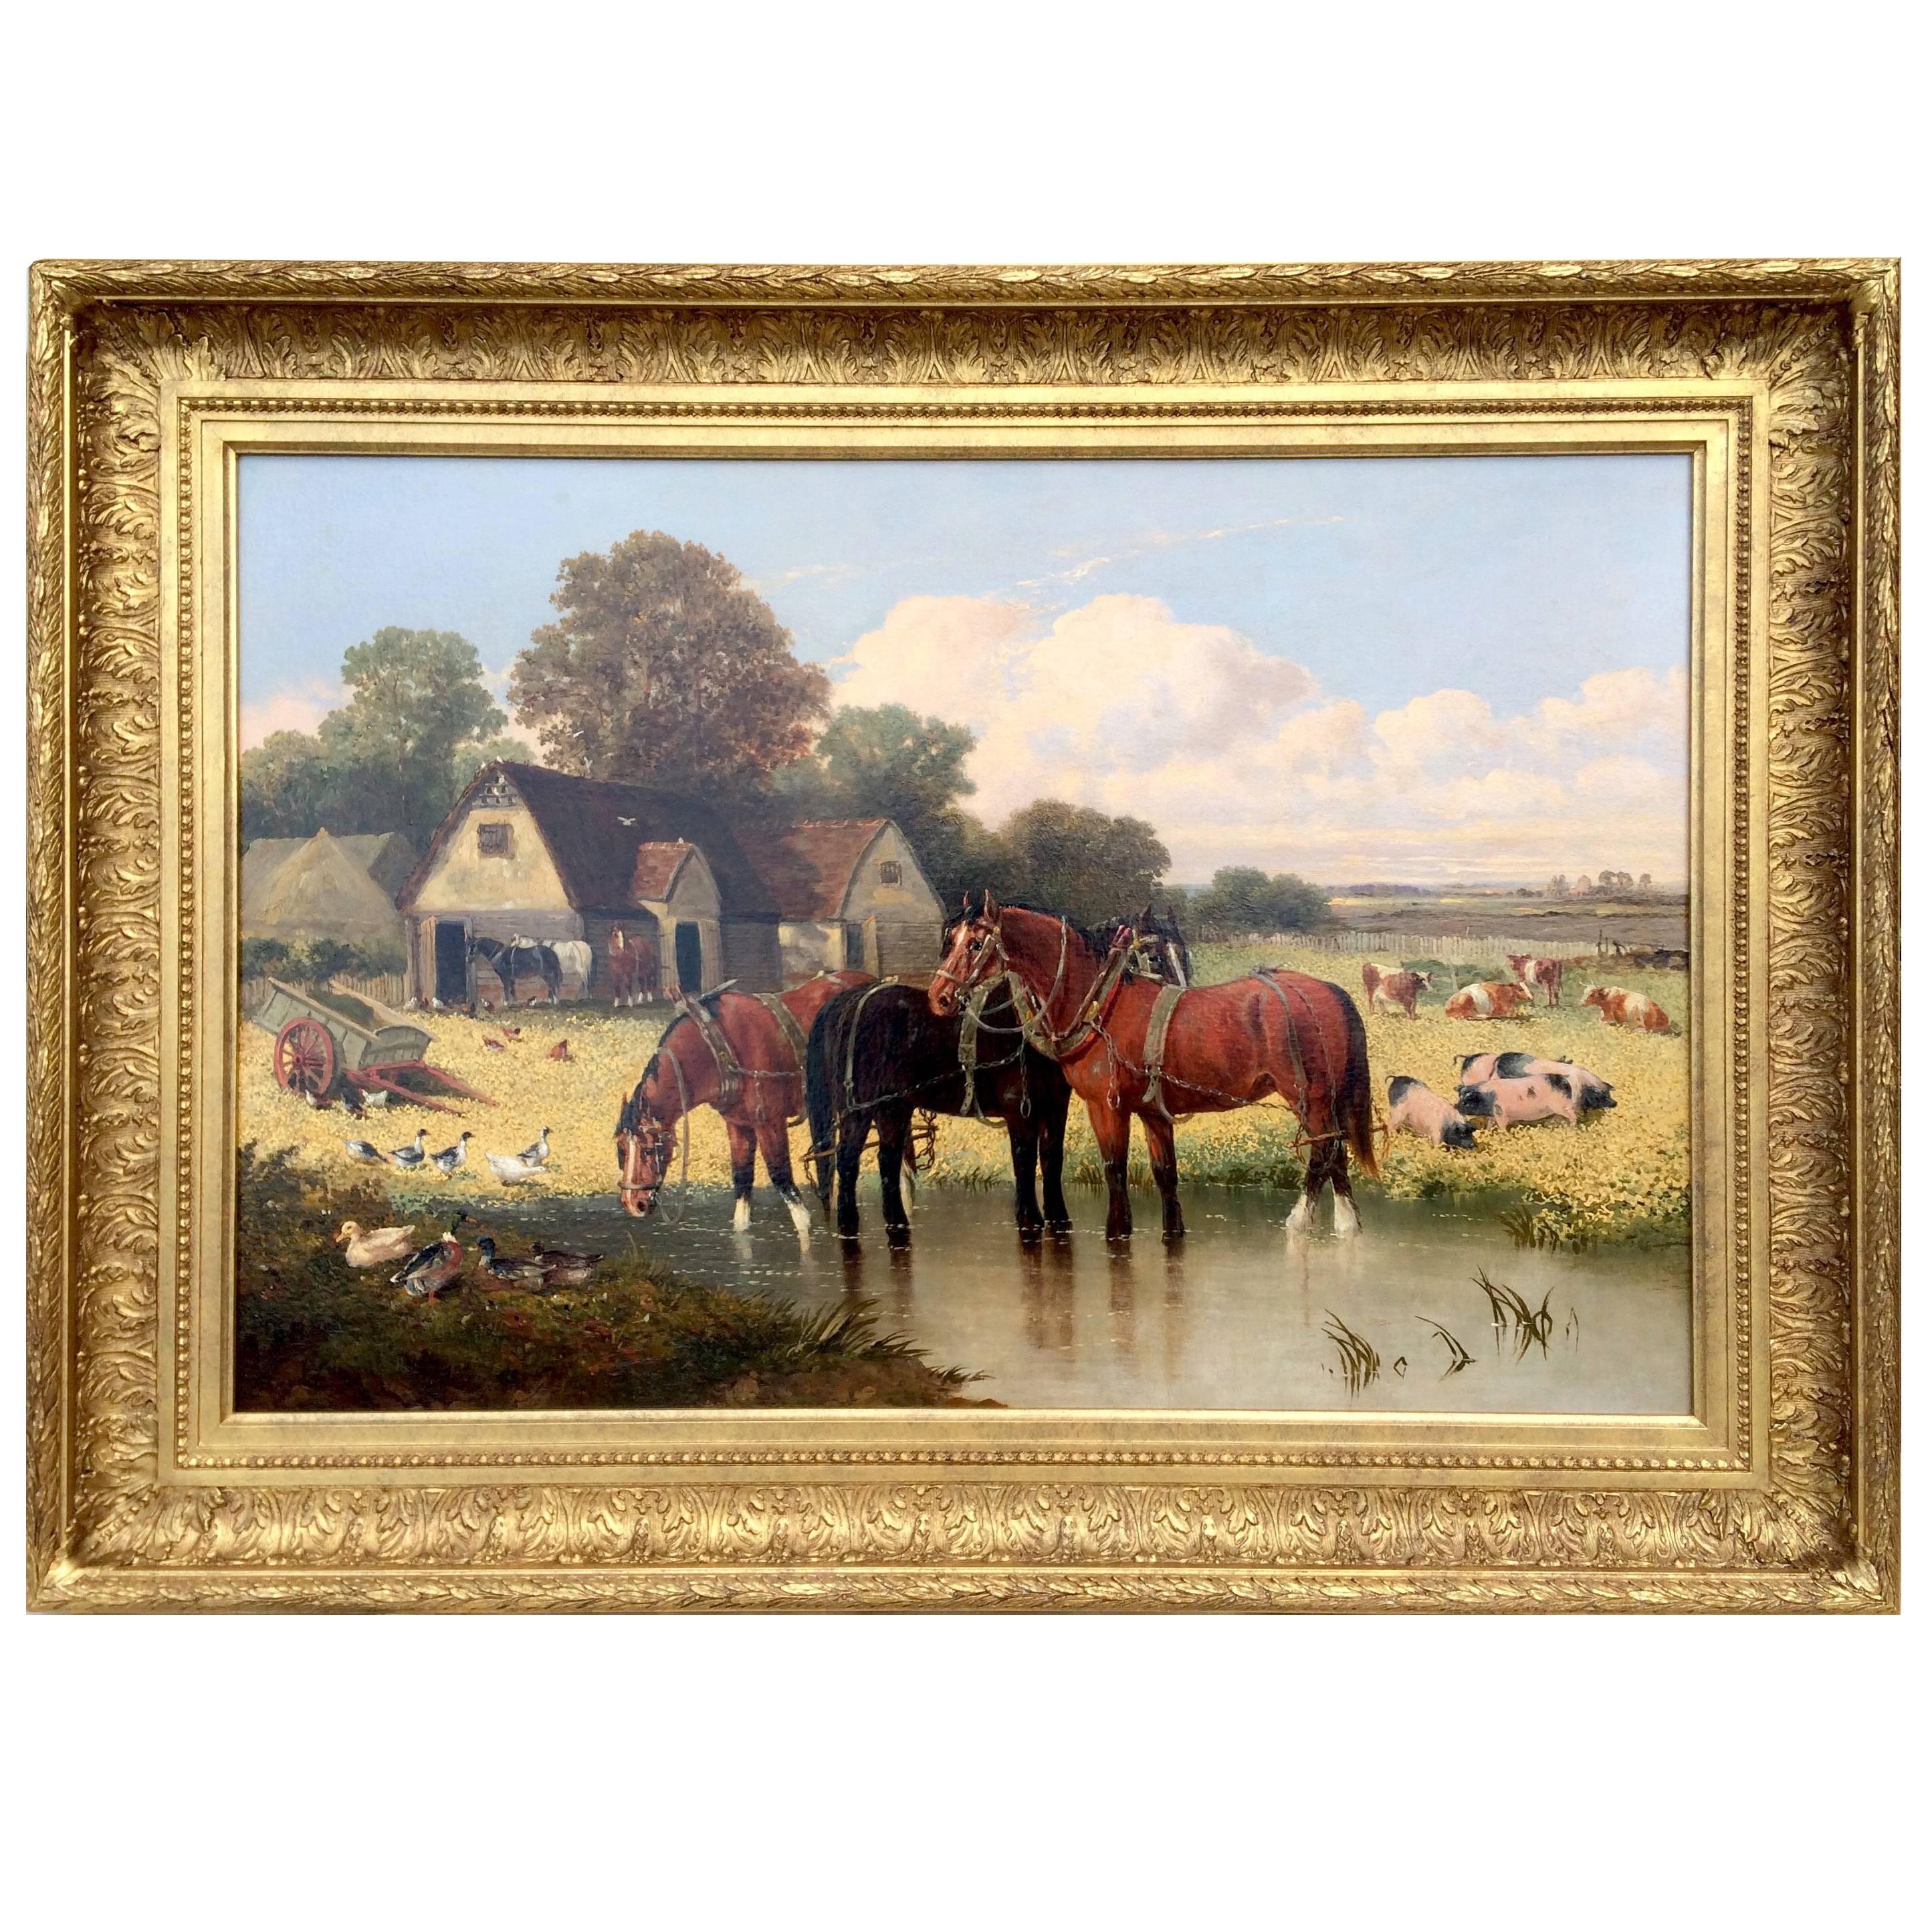 "On The Farm" by John Frederick Herring Jr.